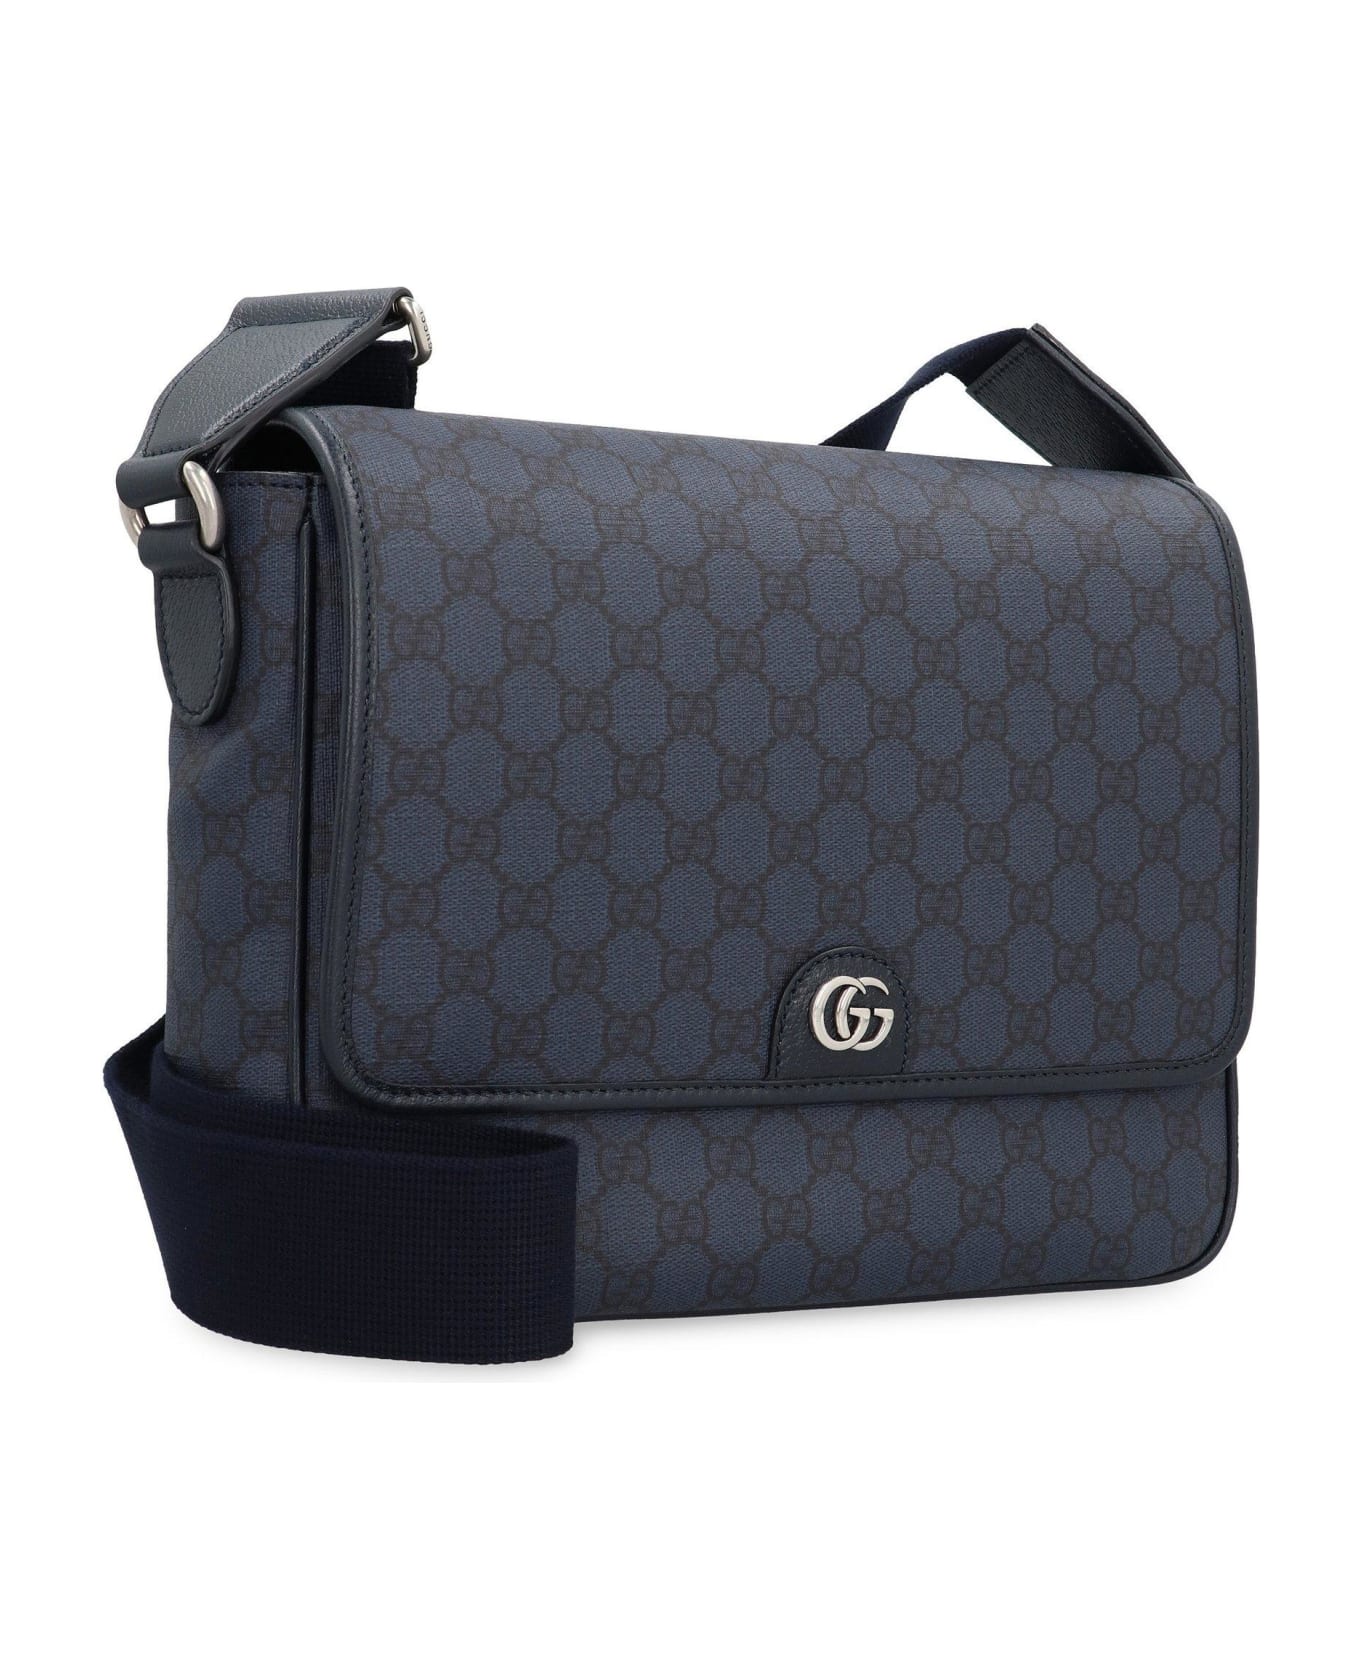 Gucci Gg Supreme Foldover Top Messenger Bag - Blue ショルダーバッグ